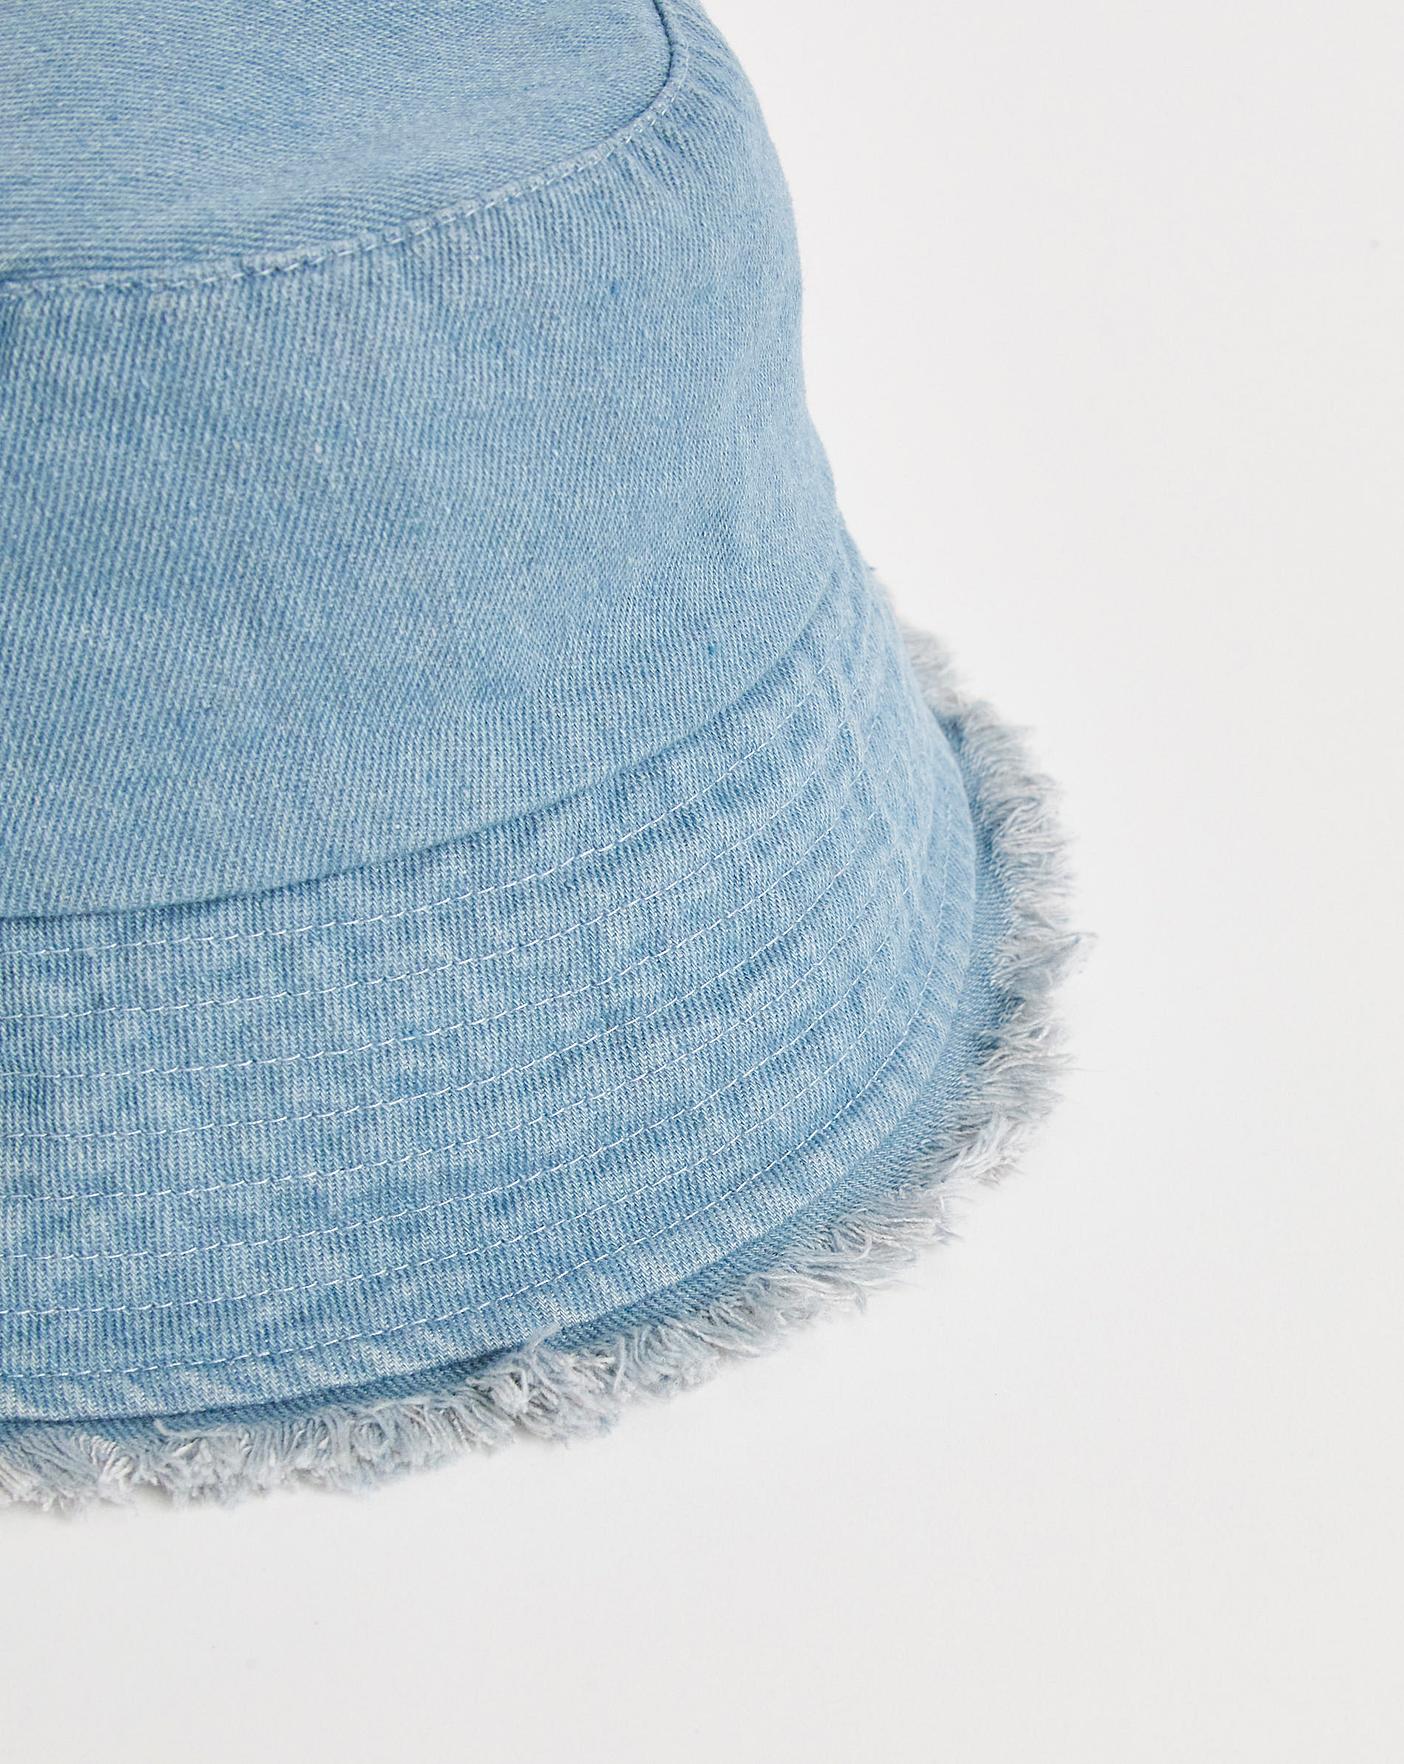 Iris Denim Bucket Hat | Urban Outfitters Australia - Clothing, Music, Home  & Accessories